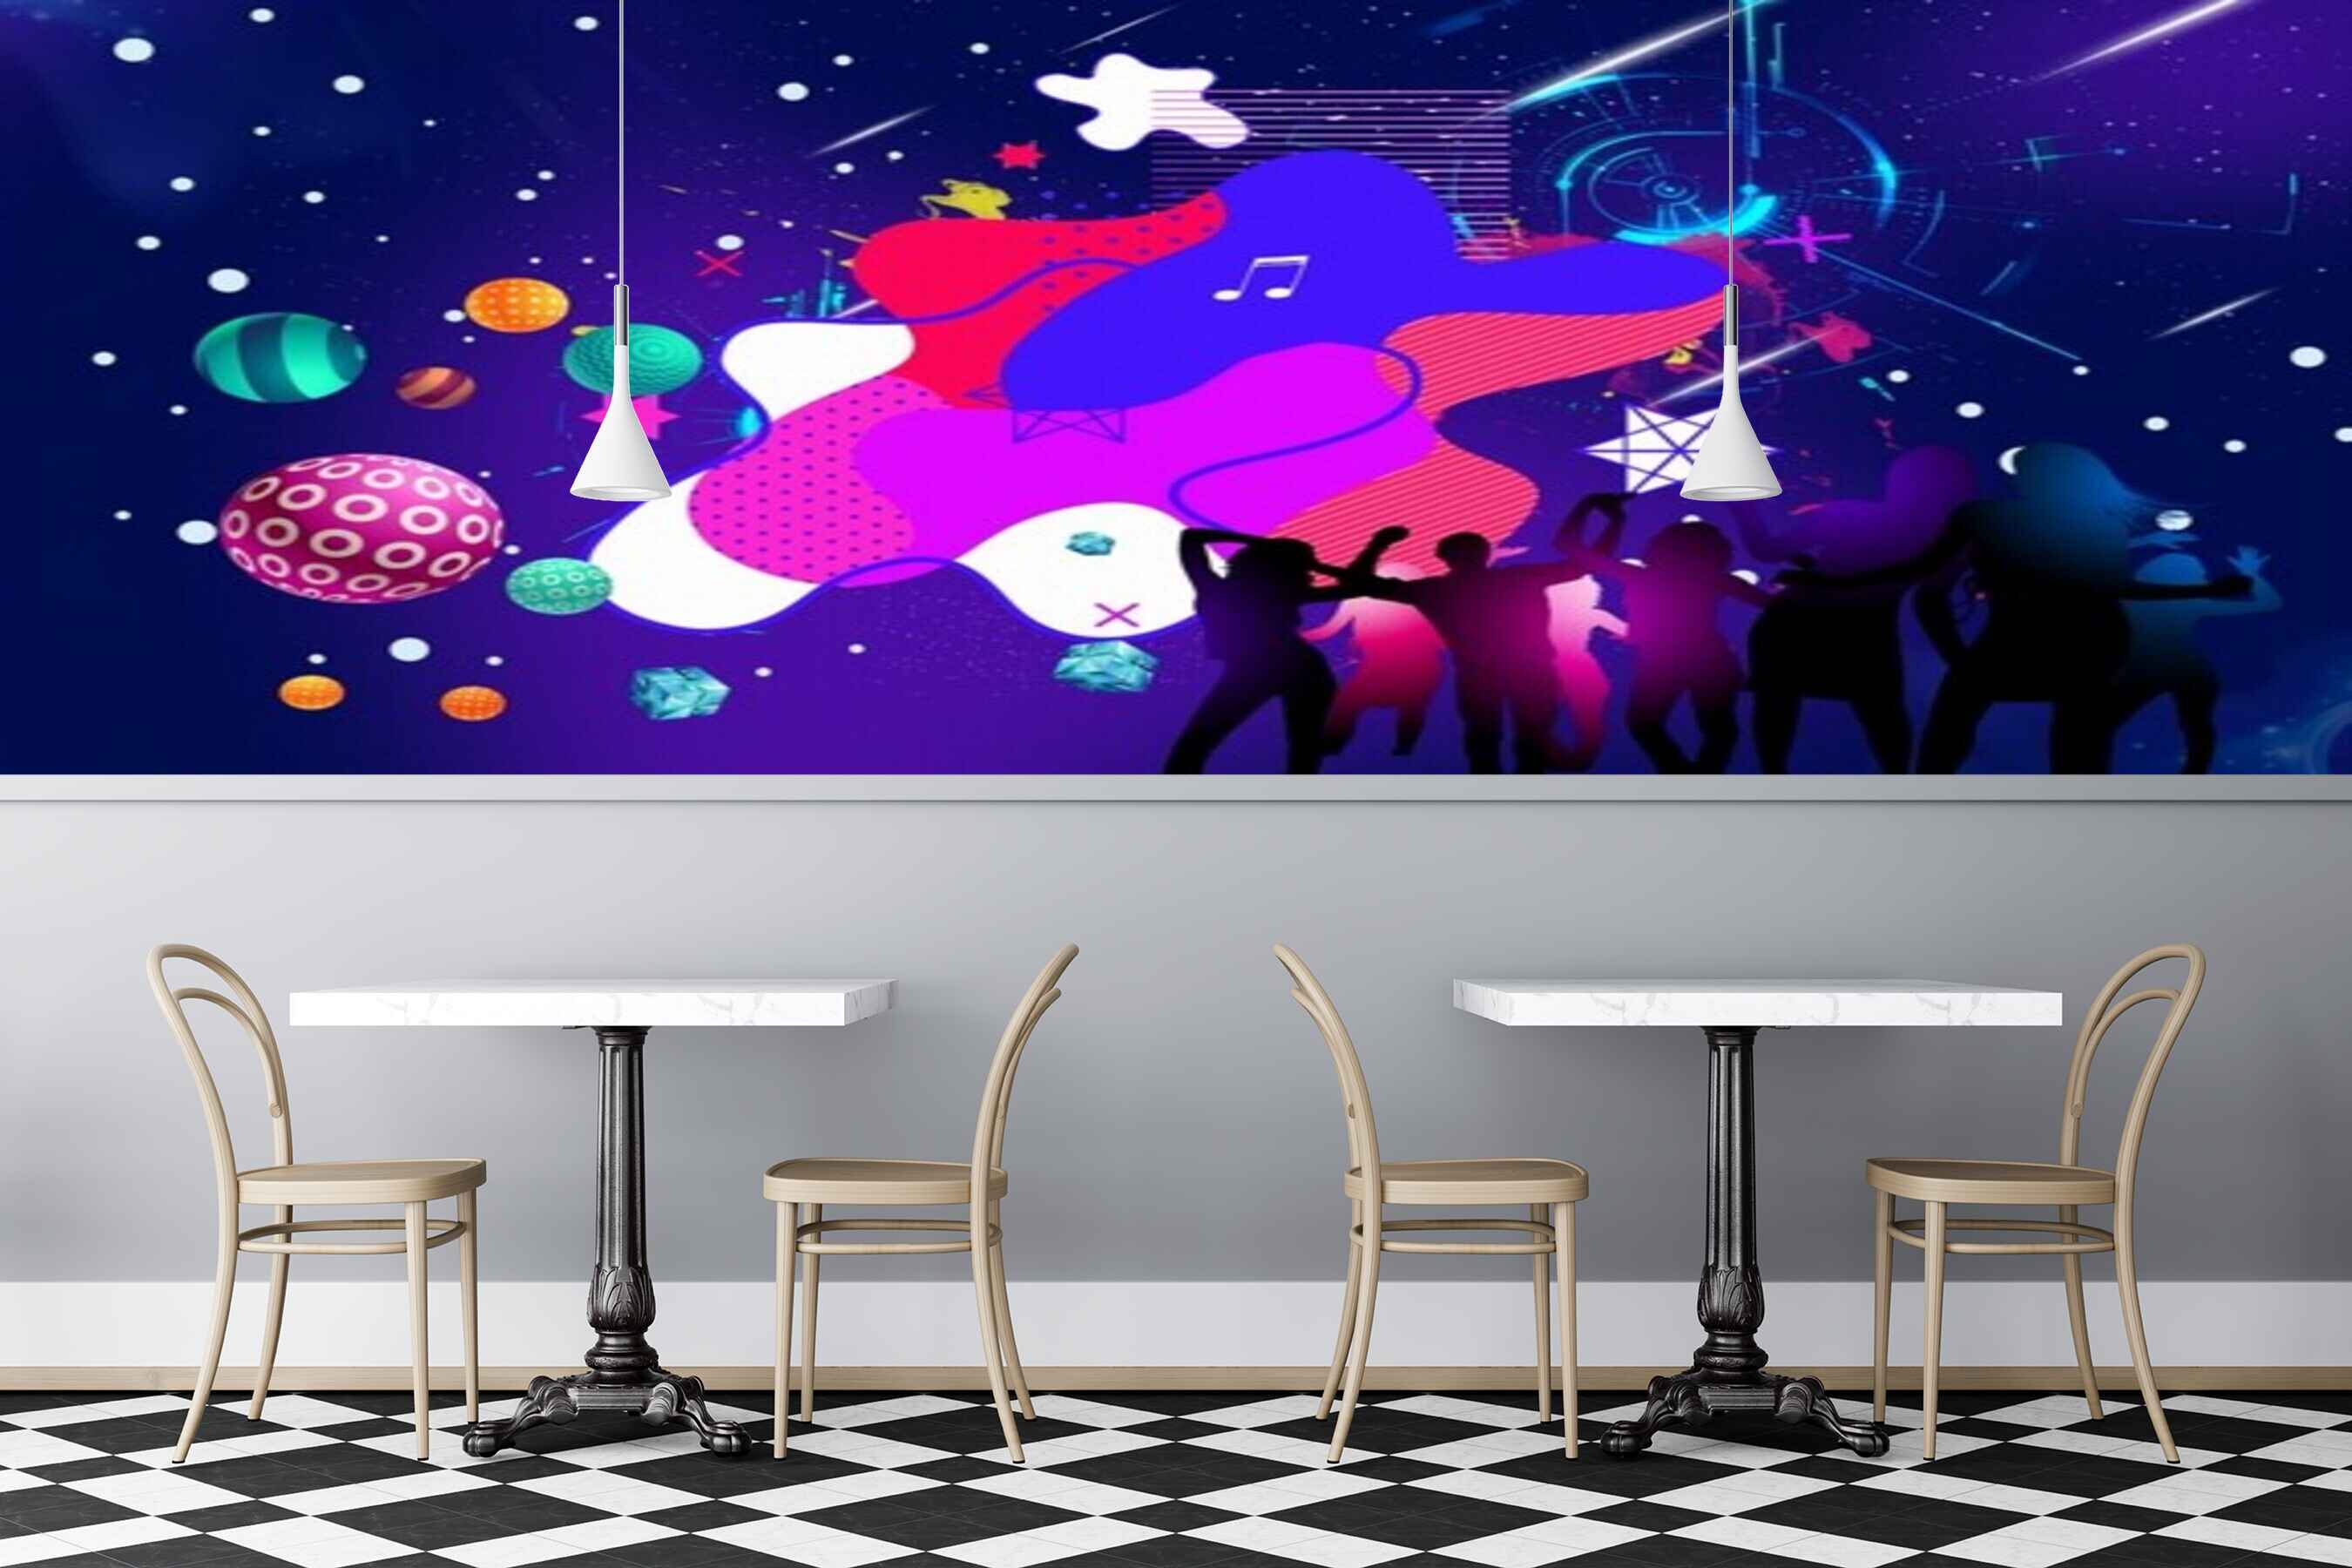 Avikalp MWZ3466 Music Singer Instrument Players Bubbles HD Wallpaper for Disco Club Karaoke